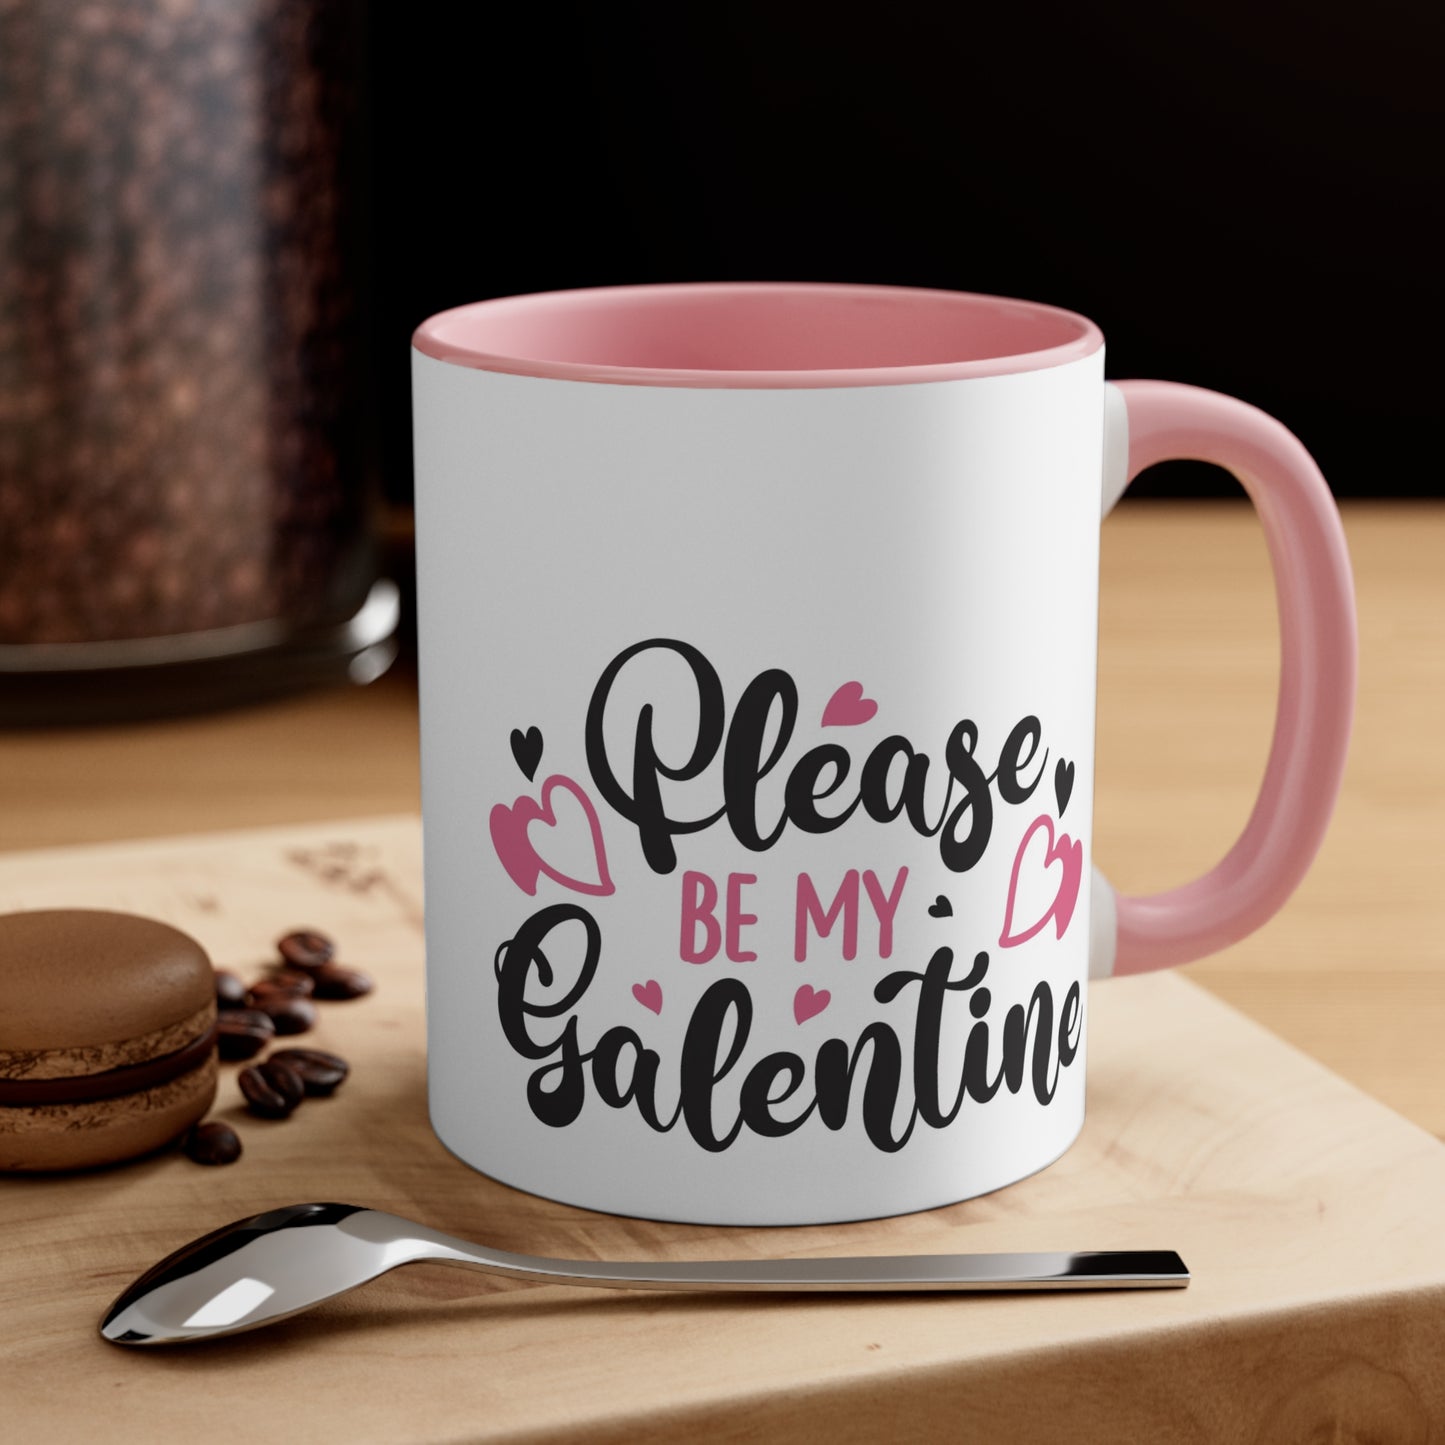 Please Be My Galentine Accent Coffee Mug, 11oz